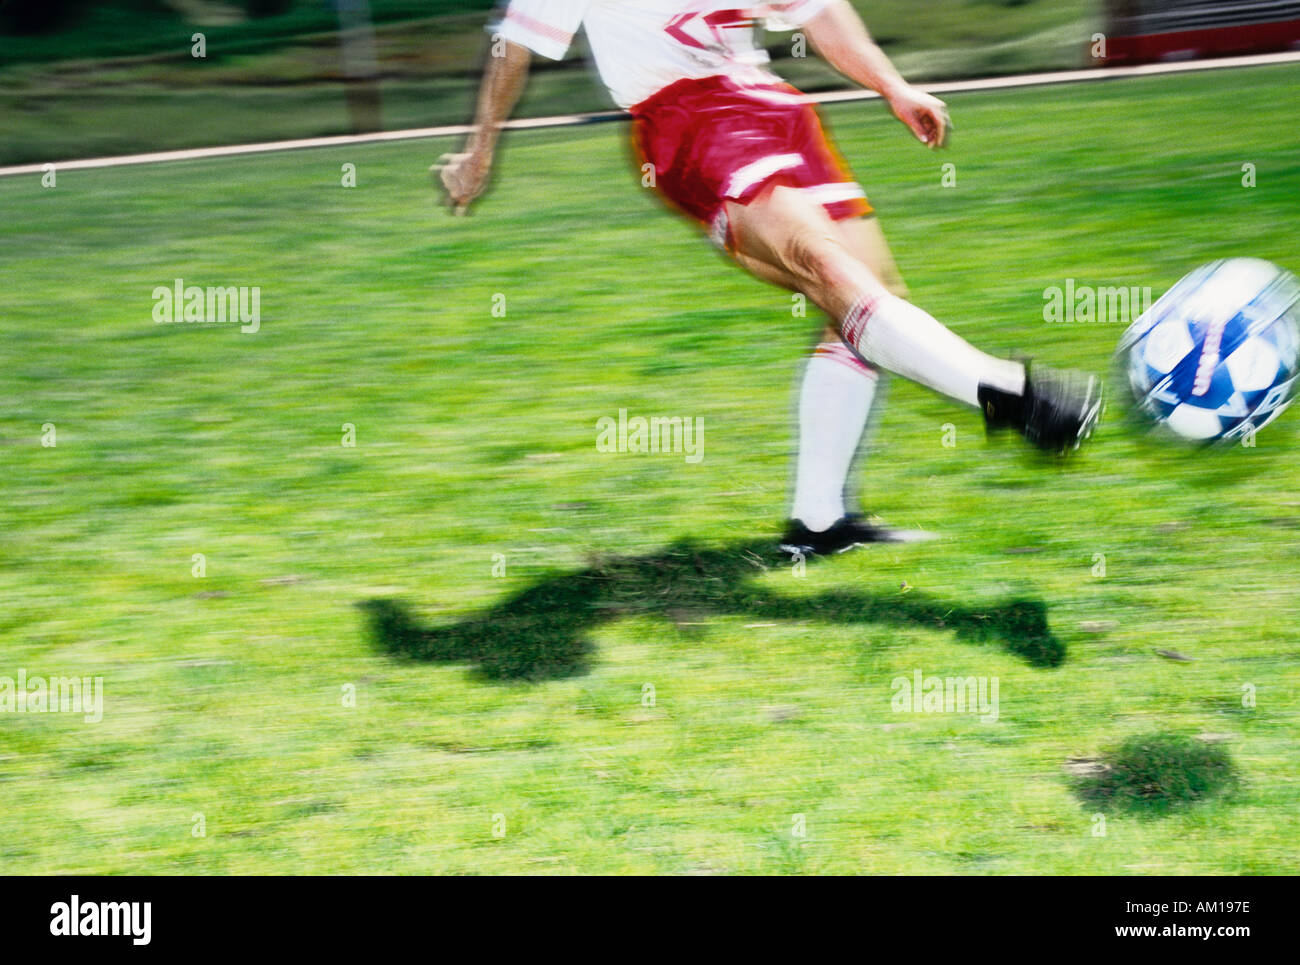 A football soccer player kicking the ball Stock Photo